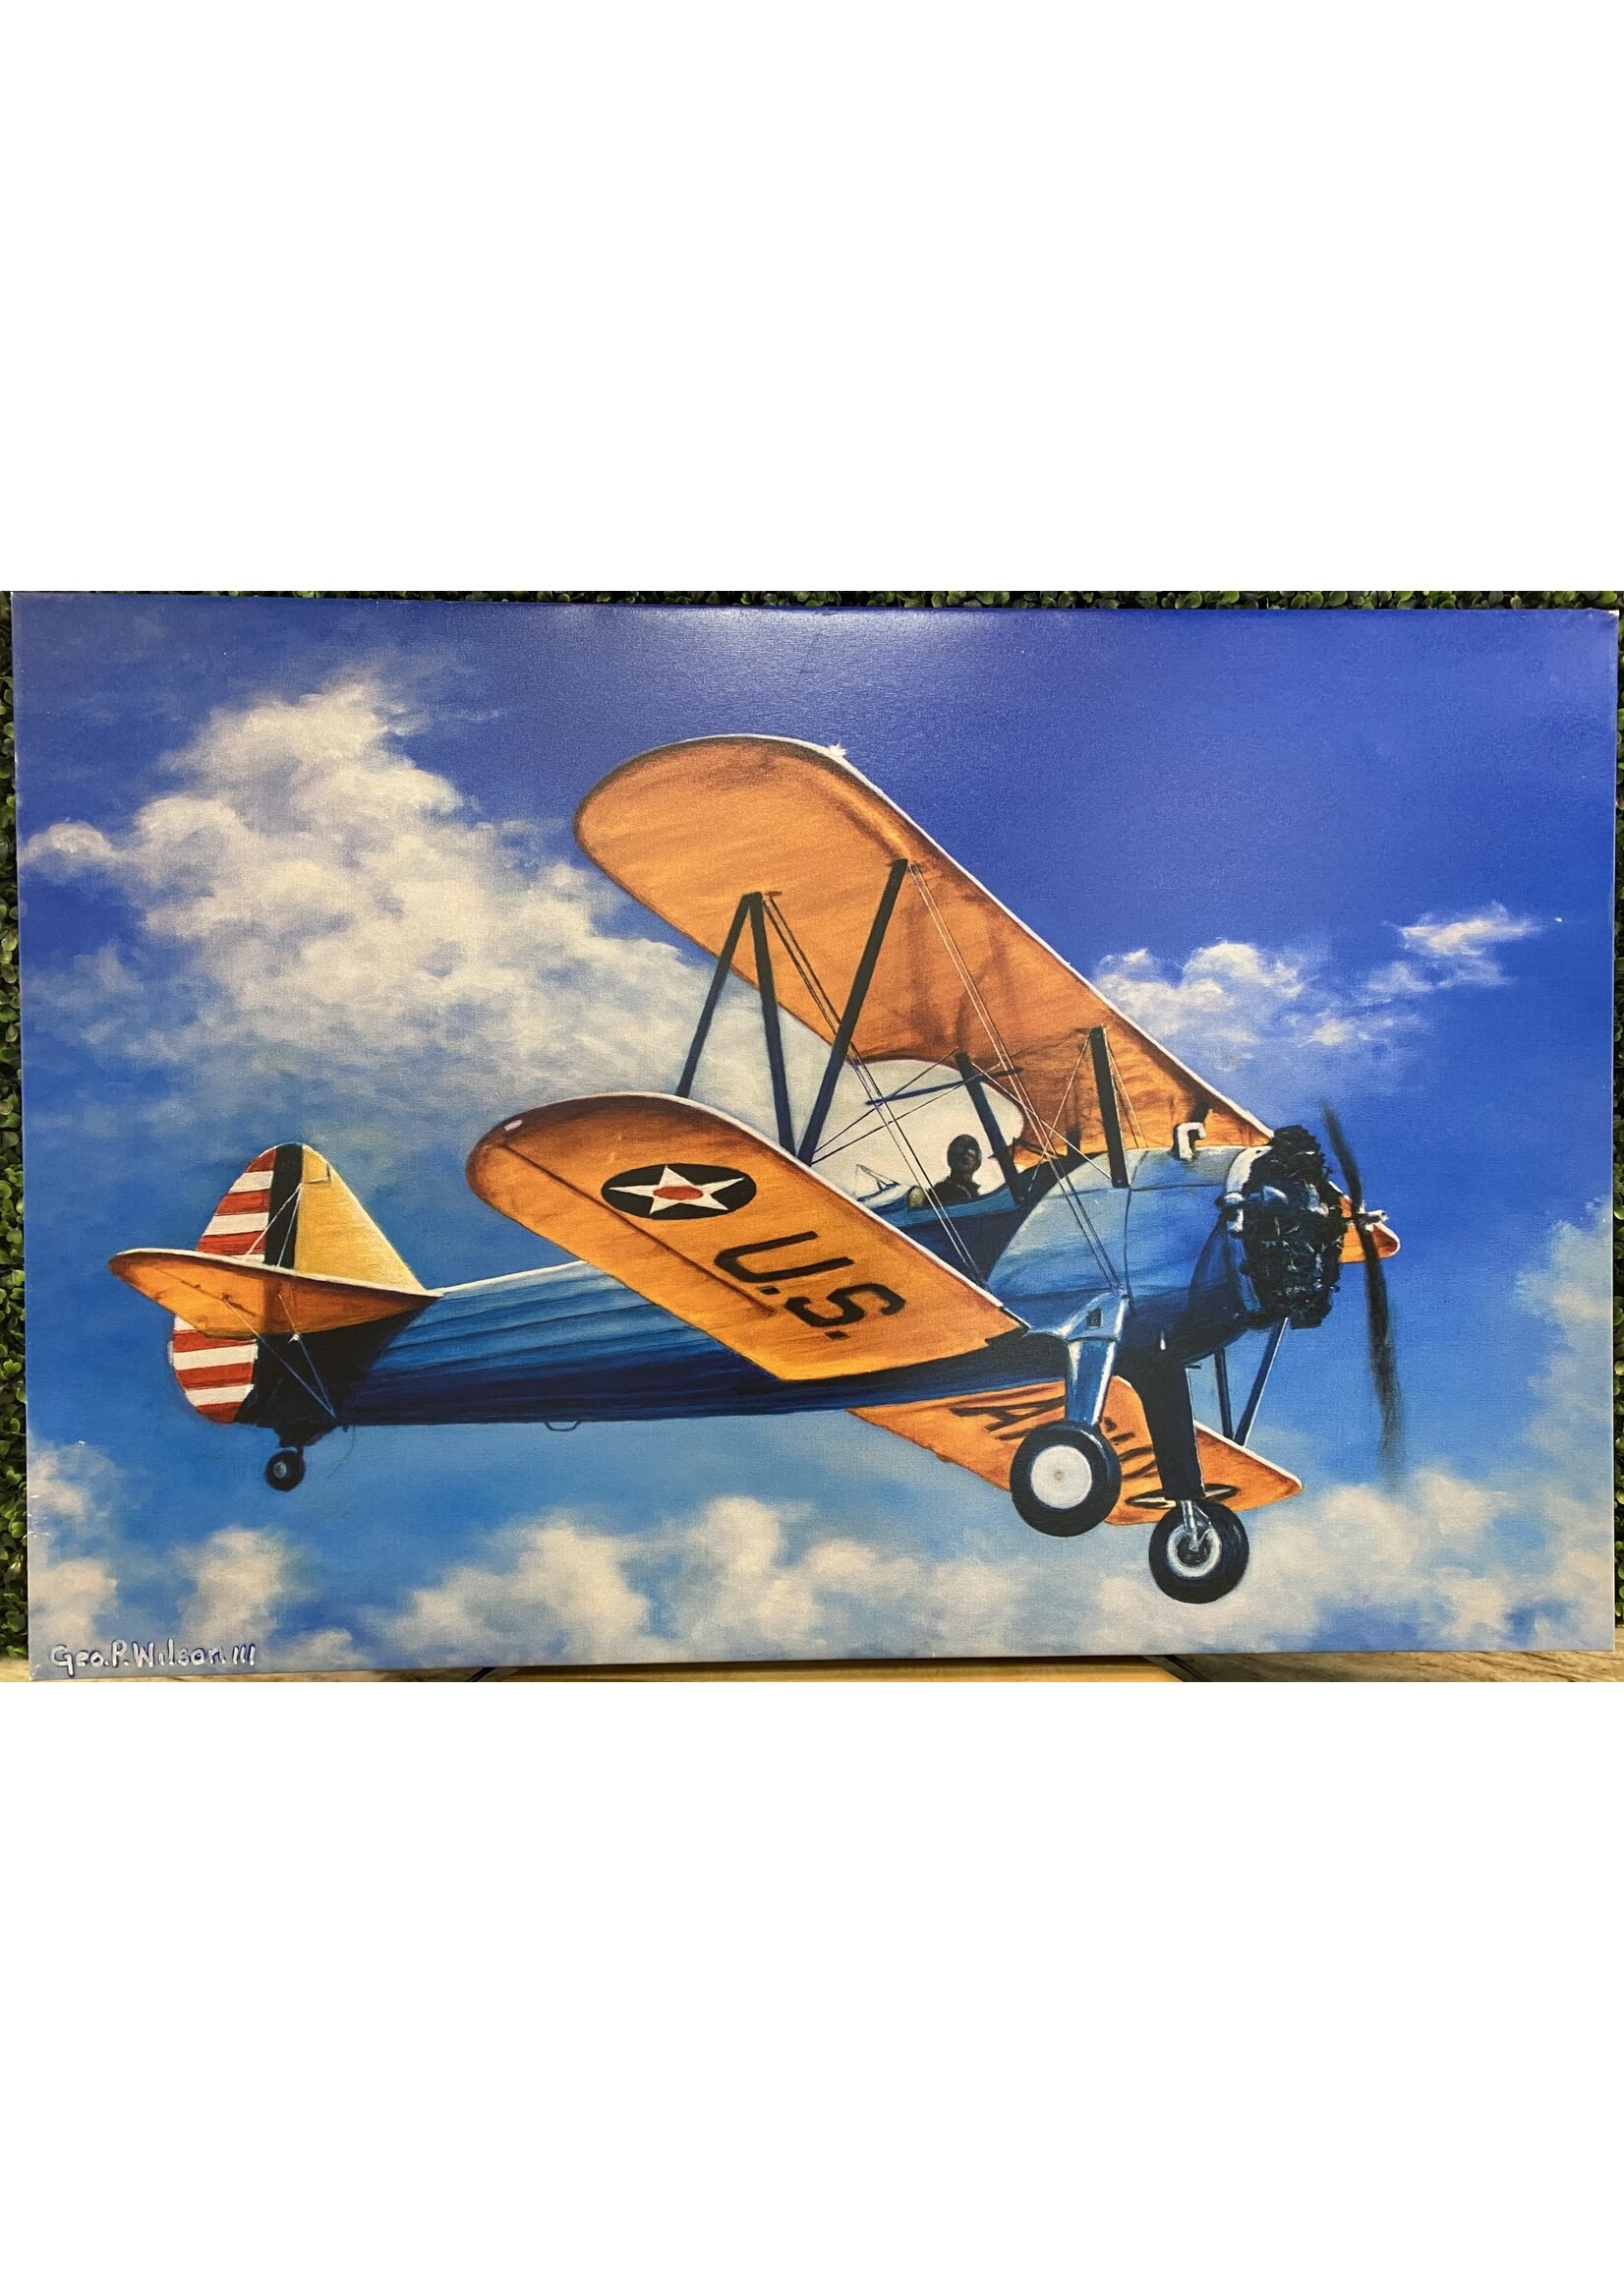 George Wilson Navy Biplane Original Canvas Painting  36x24